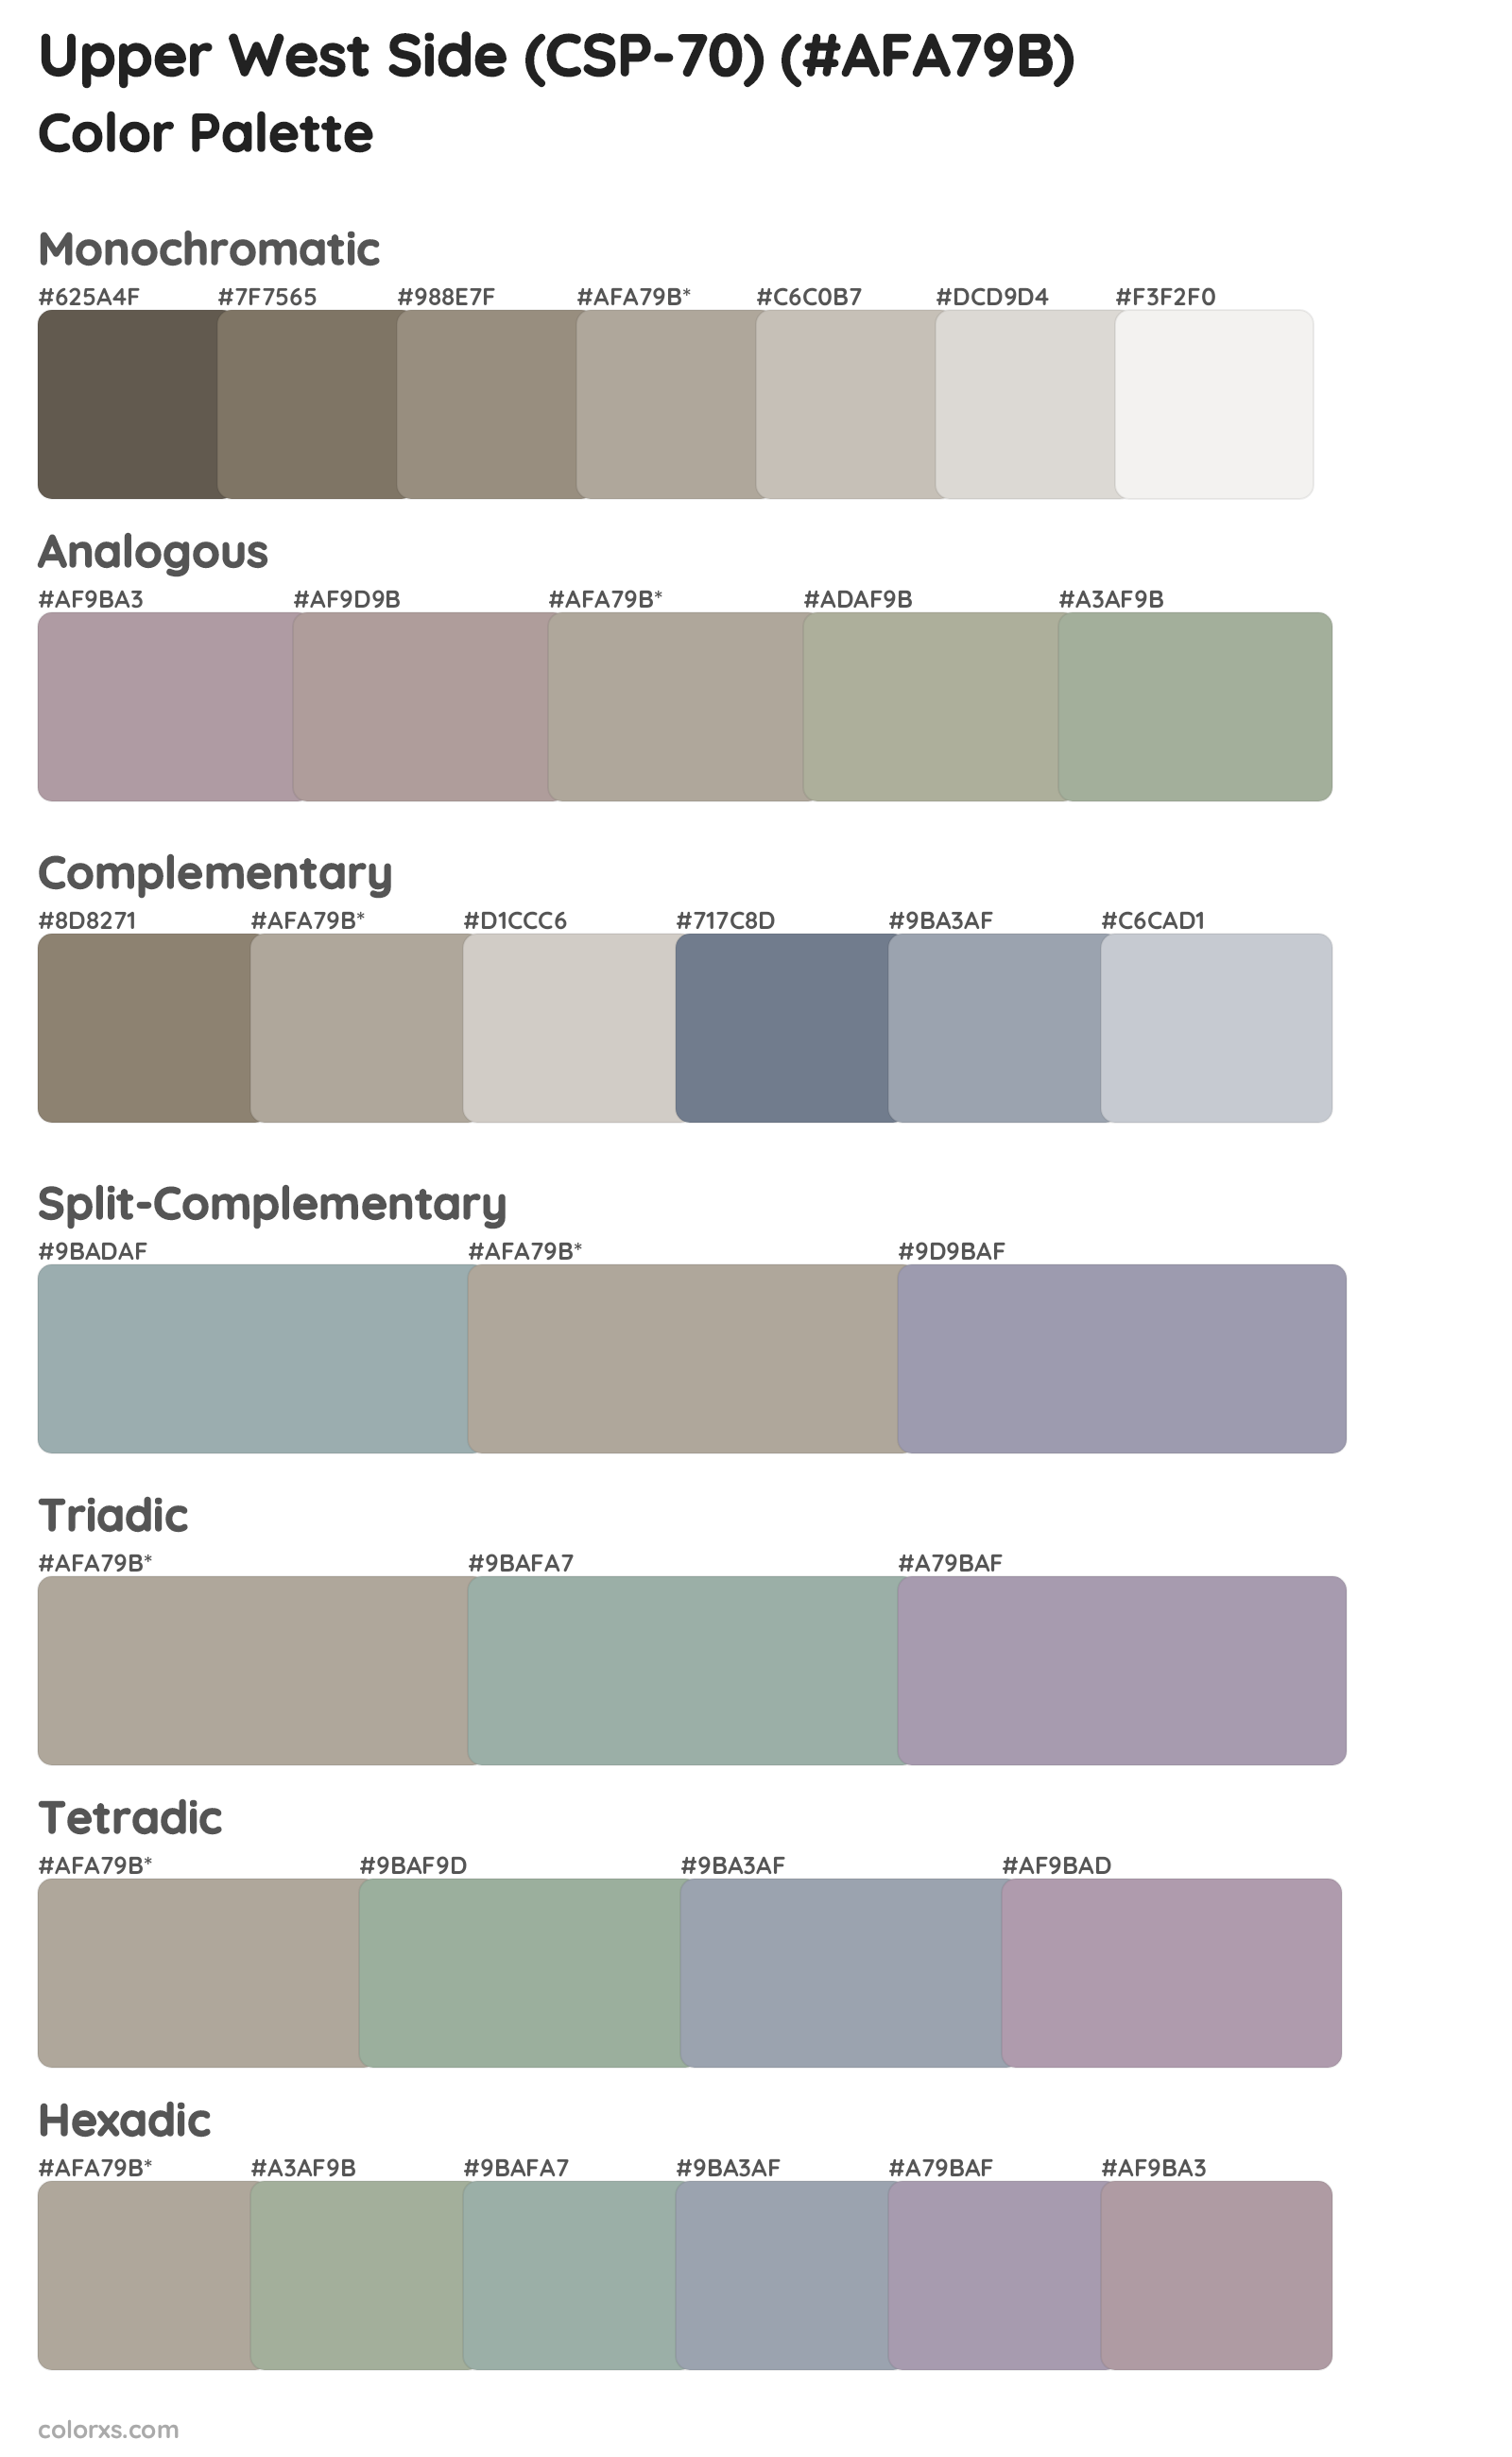 Upper West Side (CSP-70) Color Scheme Palettes